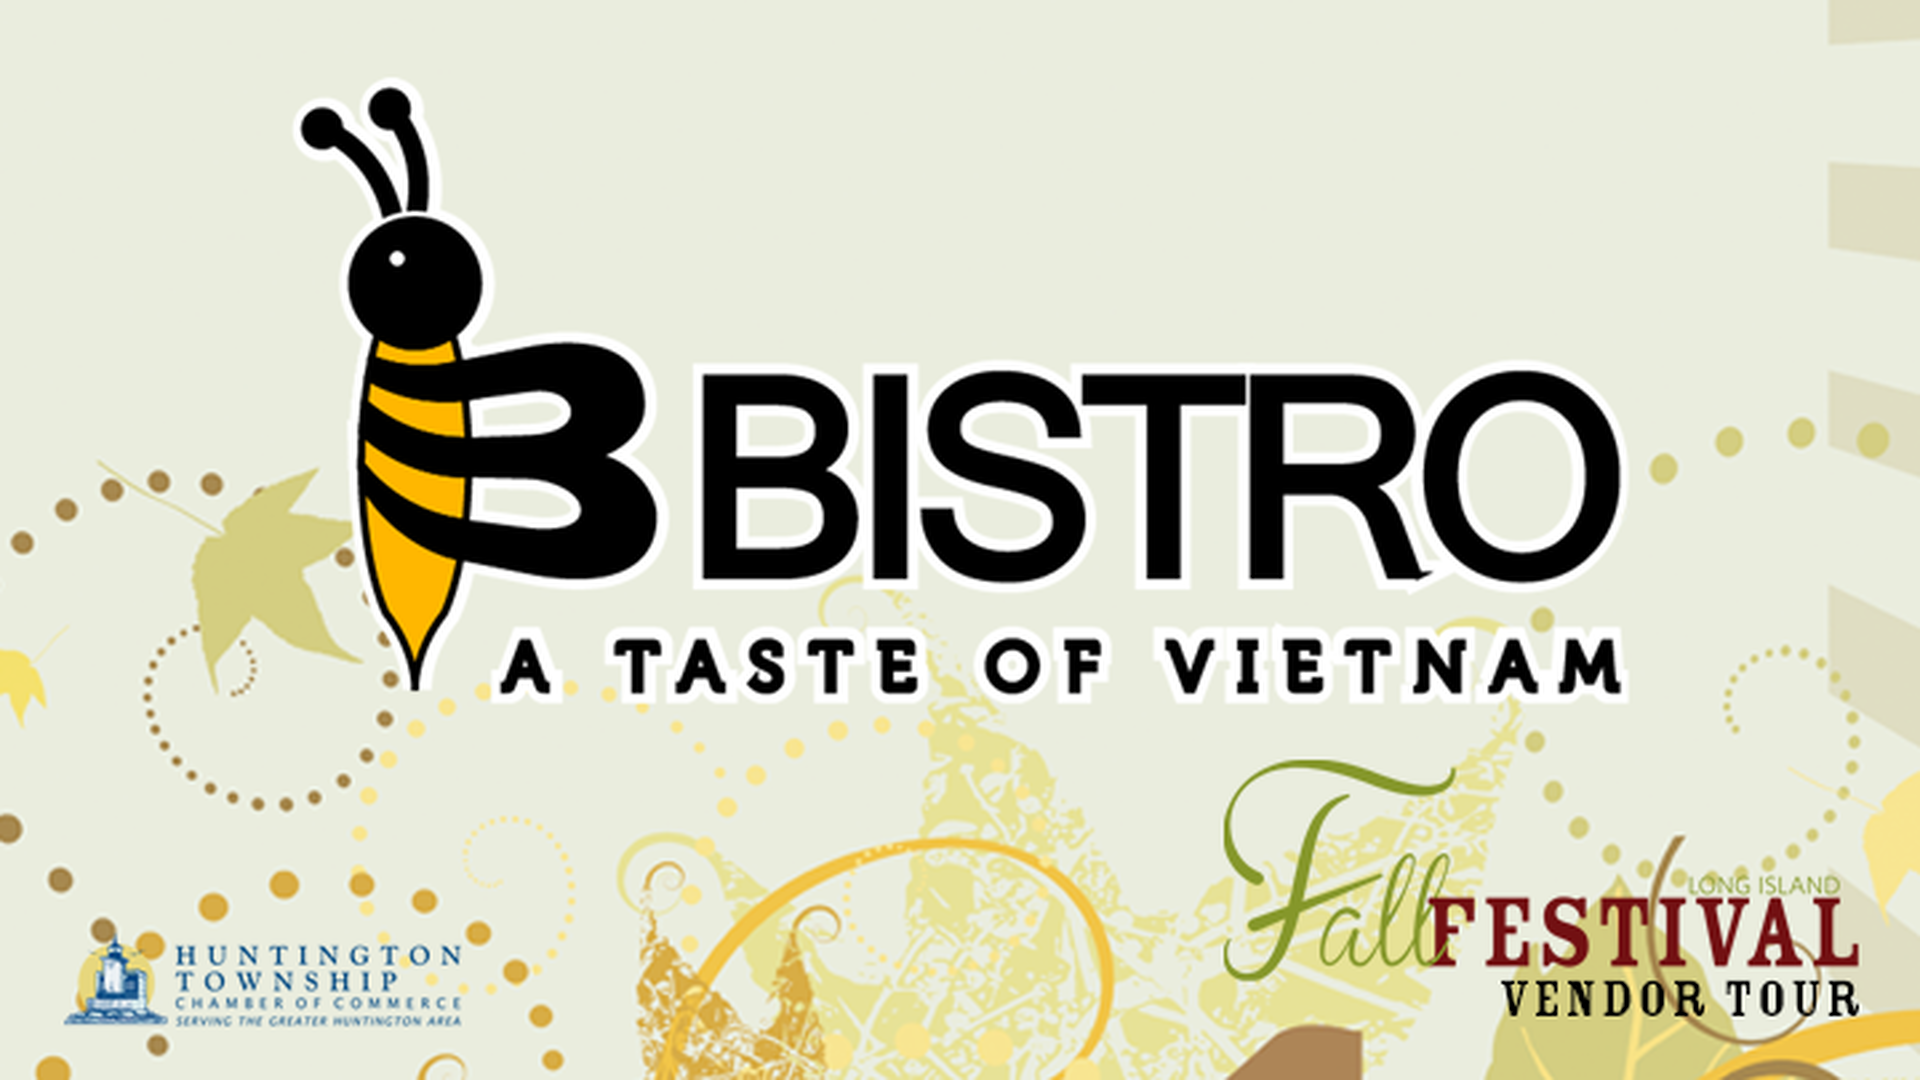 BBistro: A Taste of Vietnam - 2022 Long Island Fall Festival